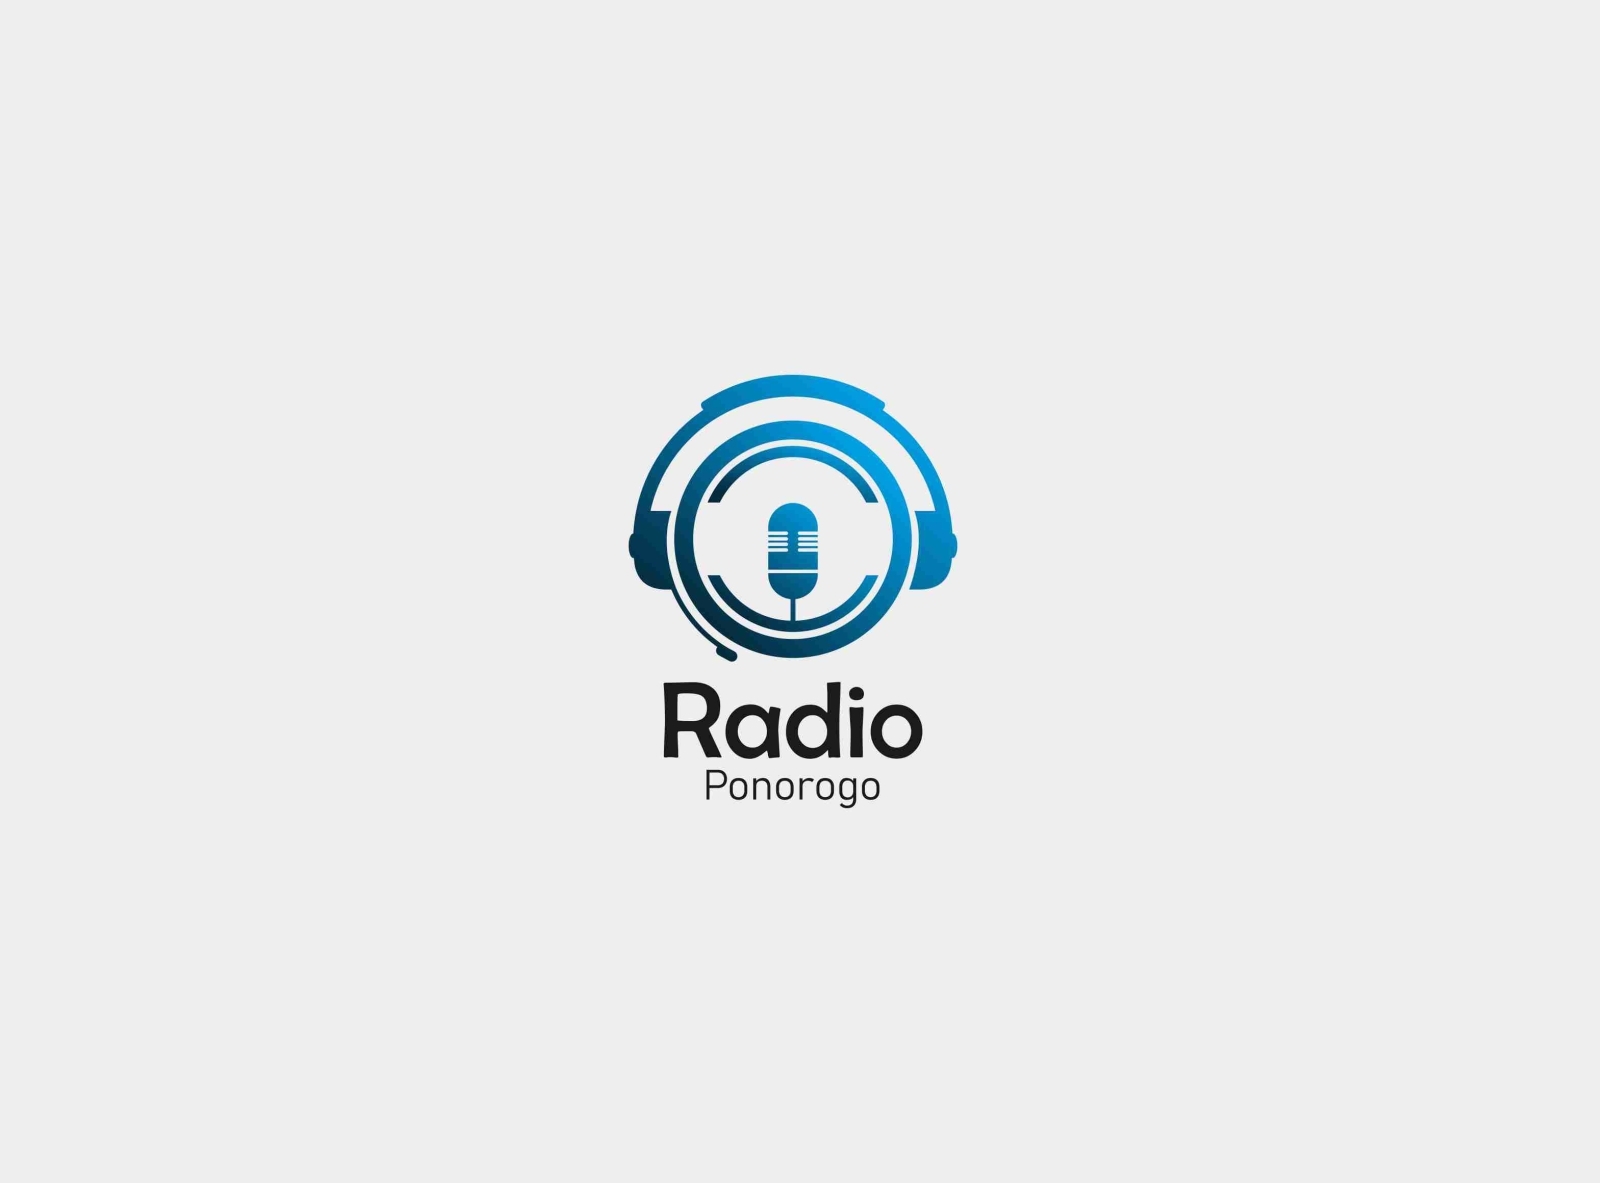 Radio Ponorogo Logo by Vieri Kurniawan on Dribbble